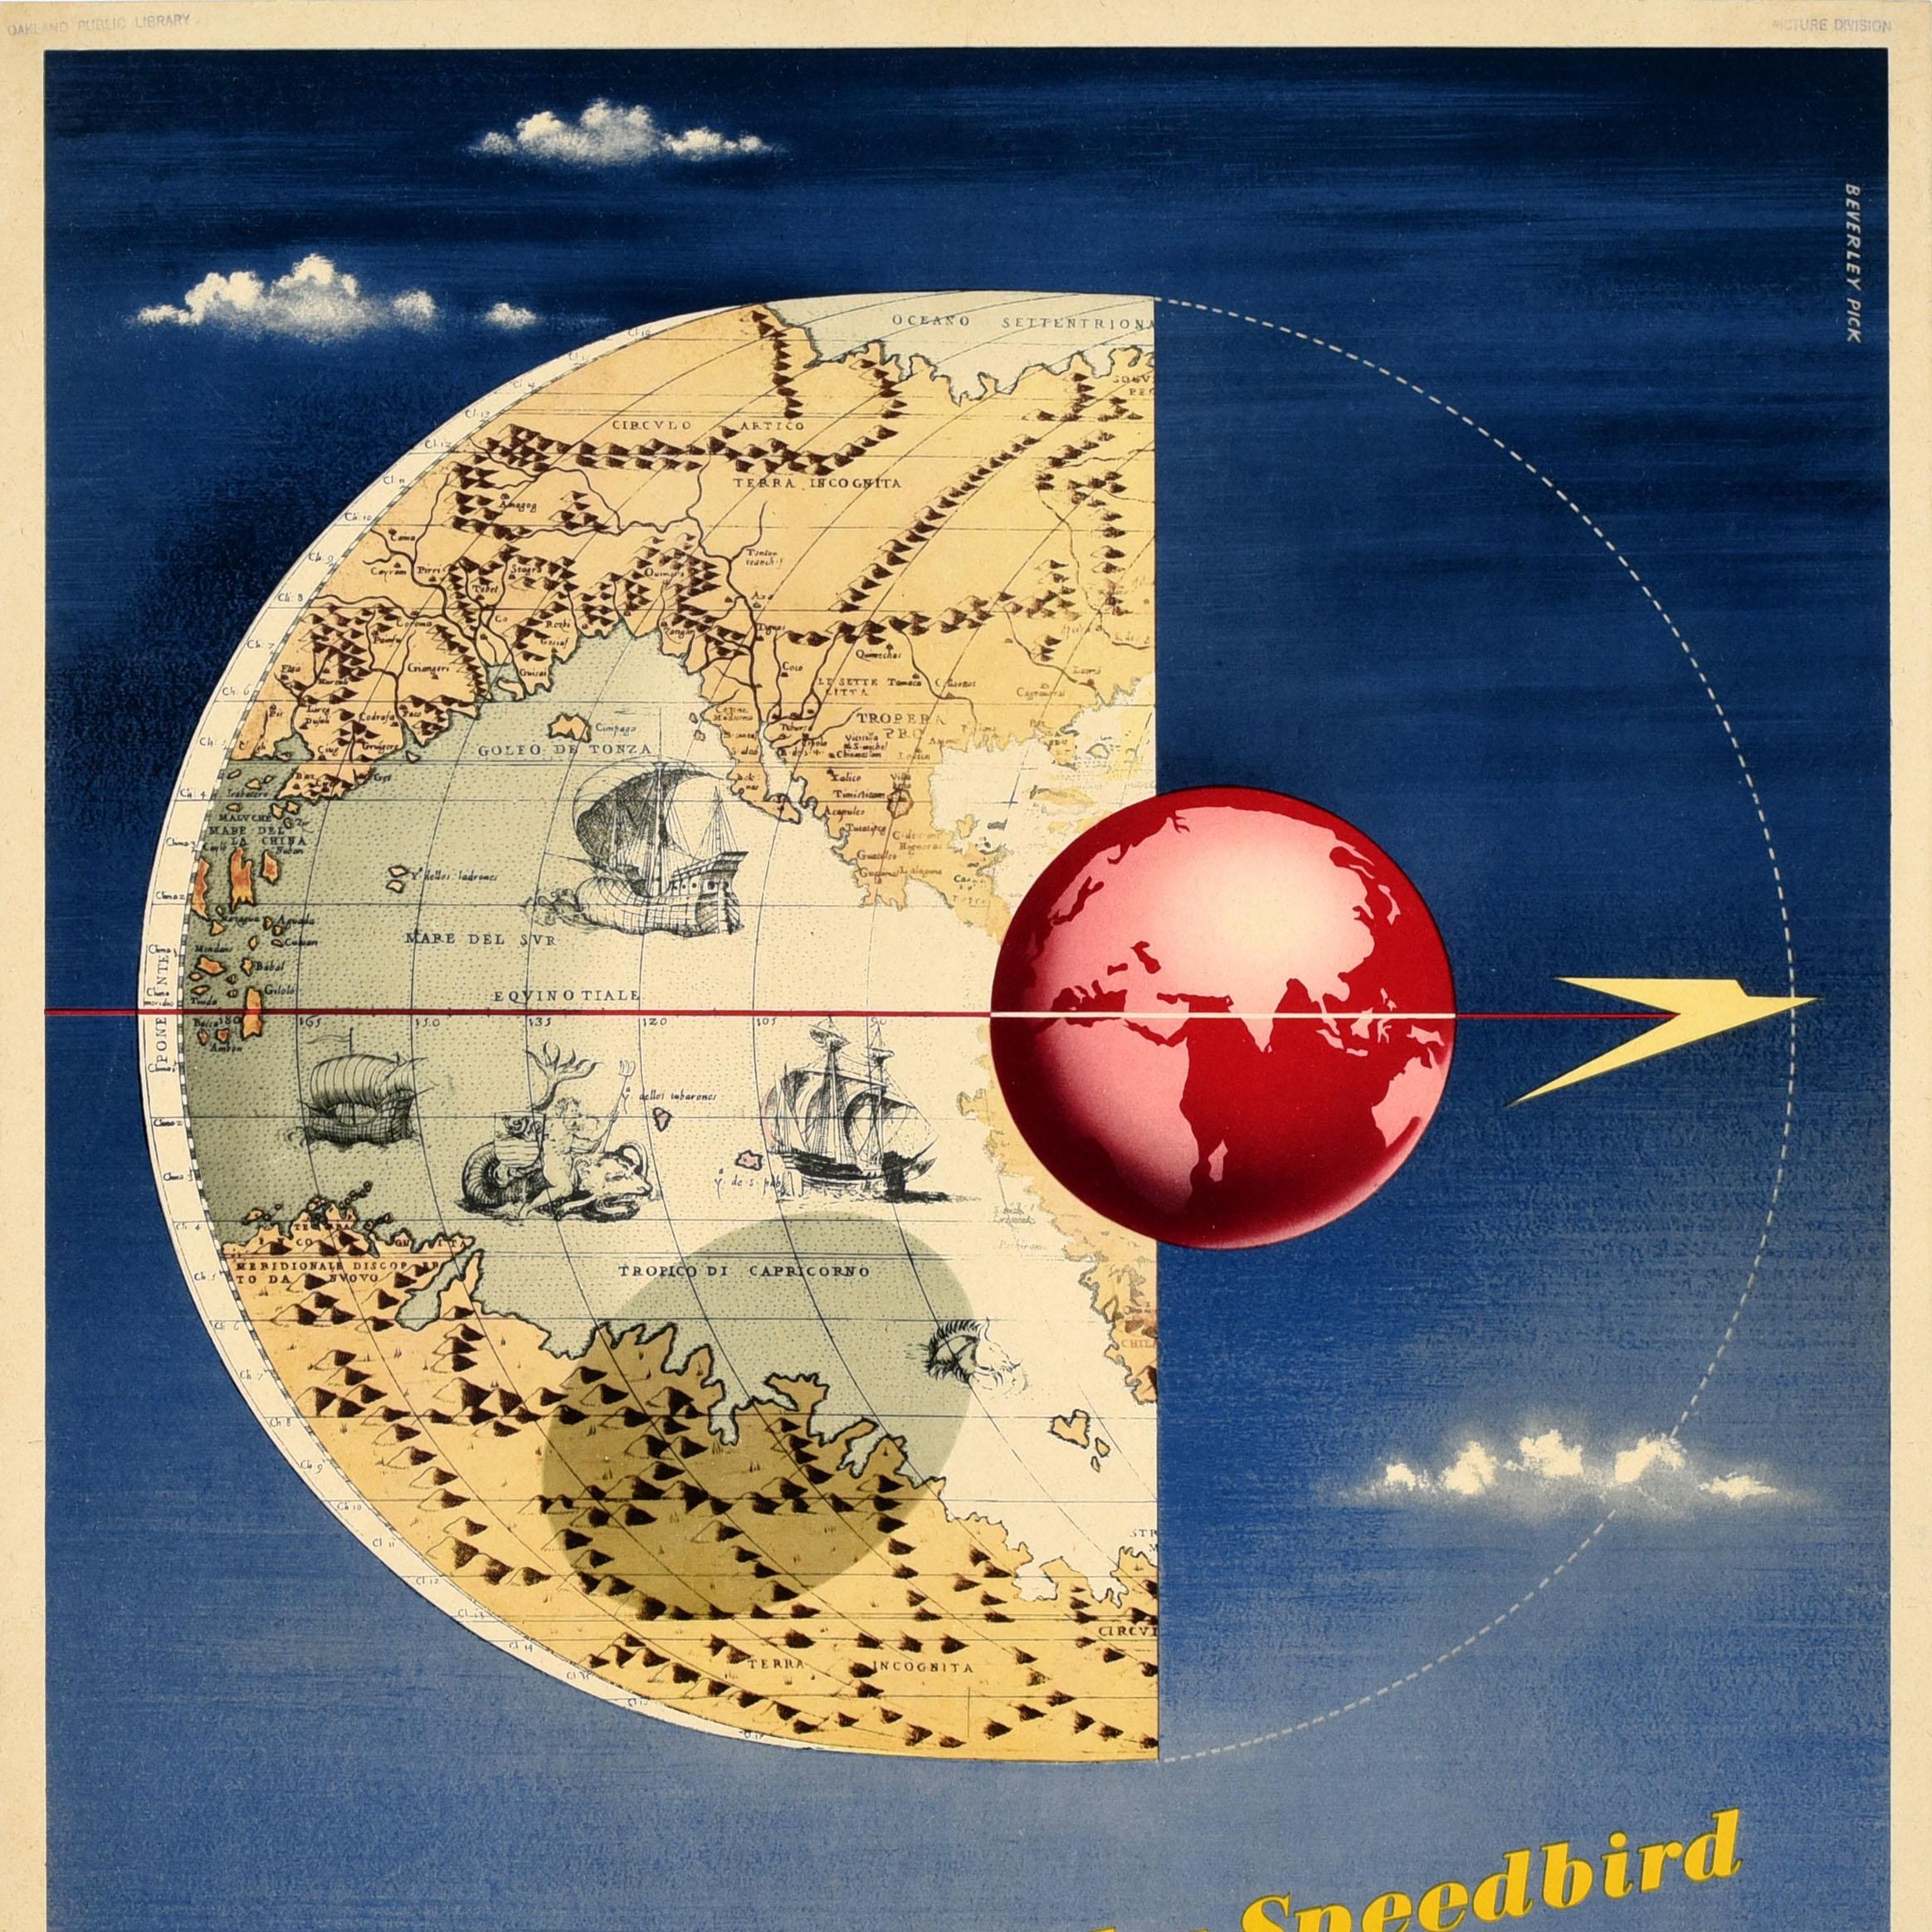 Original Vintage Travel Advertising Poster BOAC Smaller World By Speedbird 1950s - Gray Print by Beverley Pick